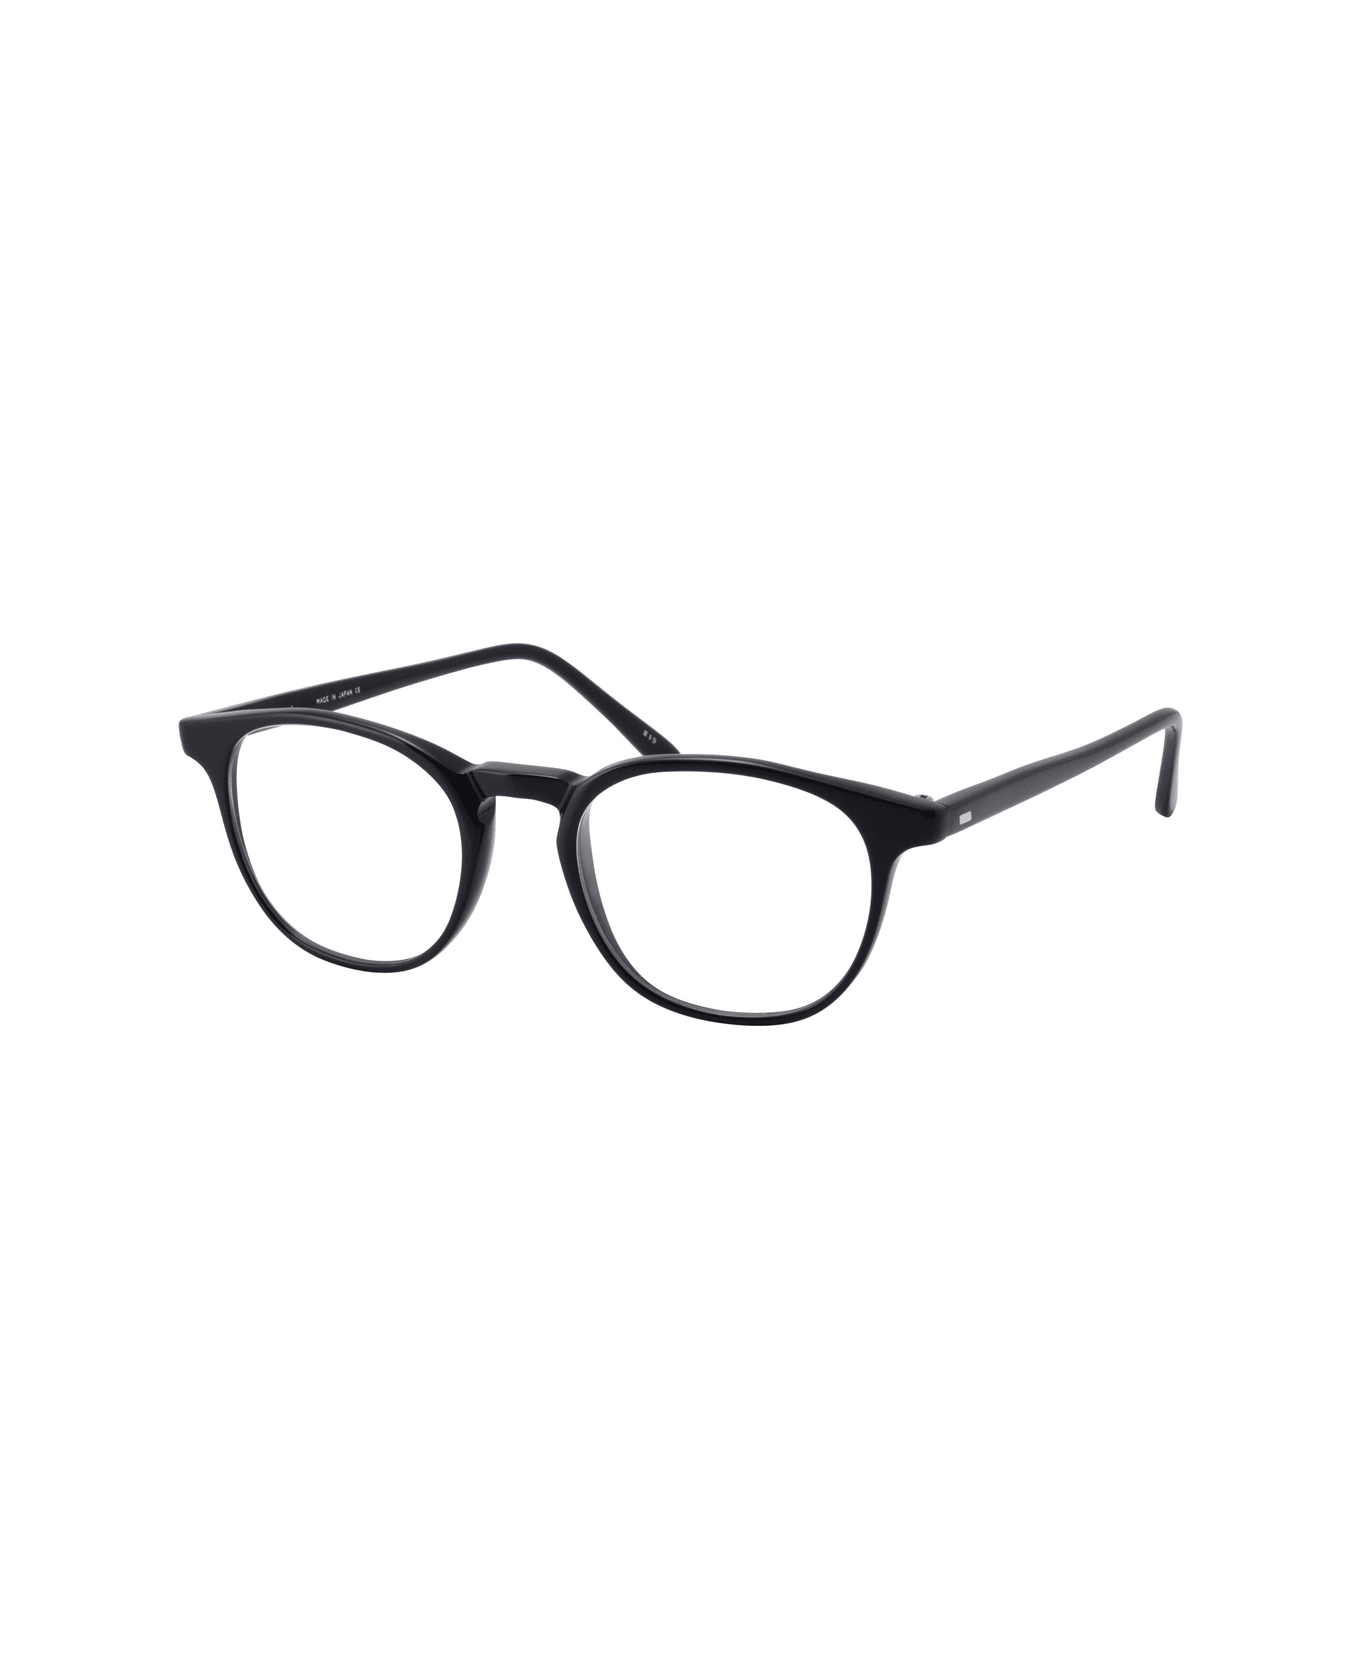 Masunaga Gms-07 19 Glasses - Nero